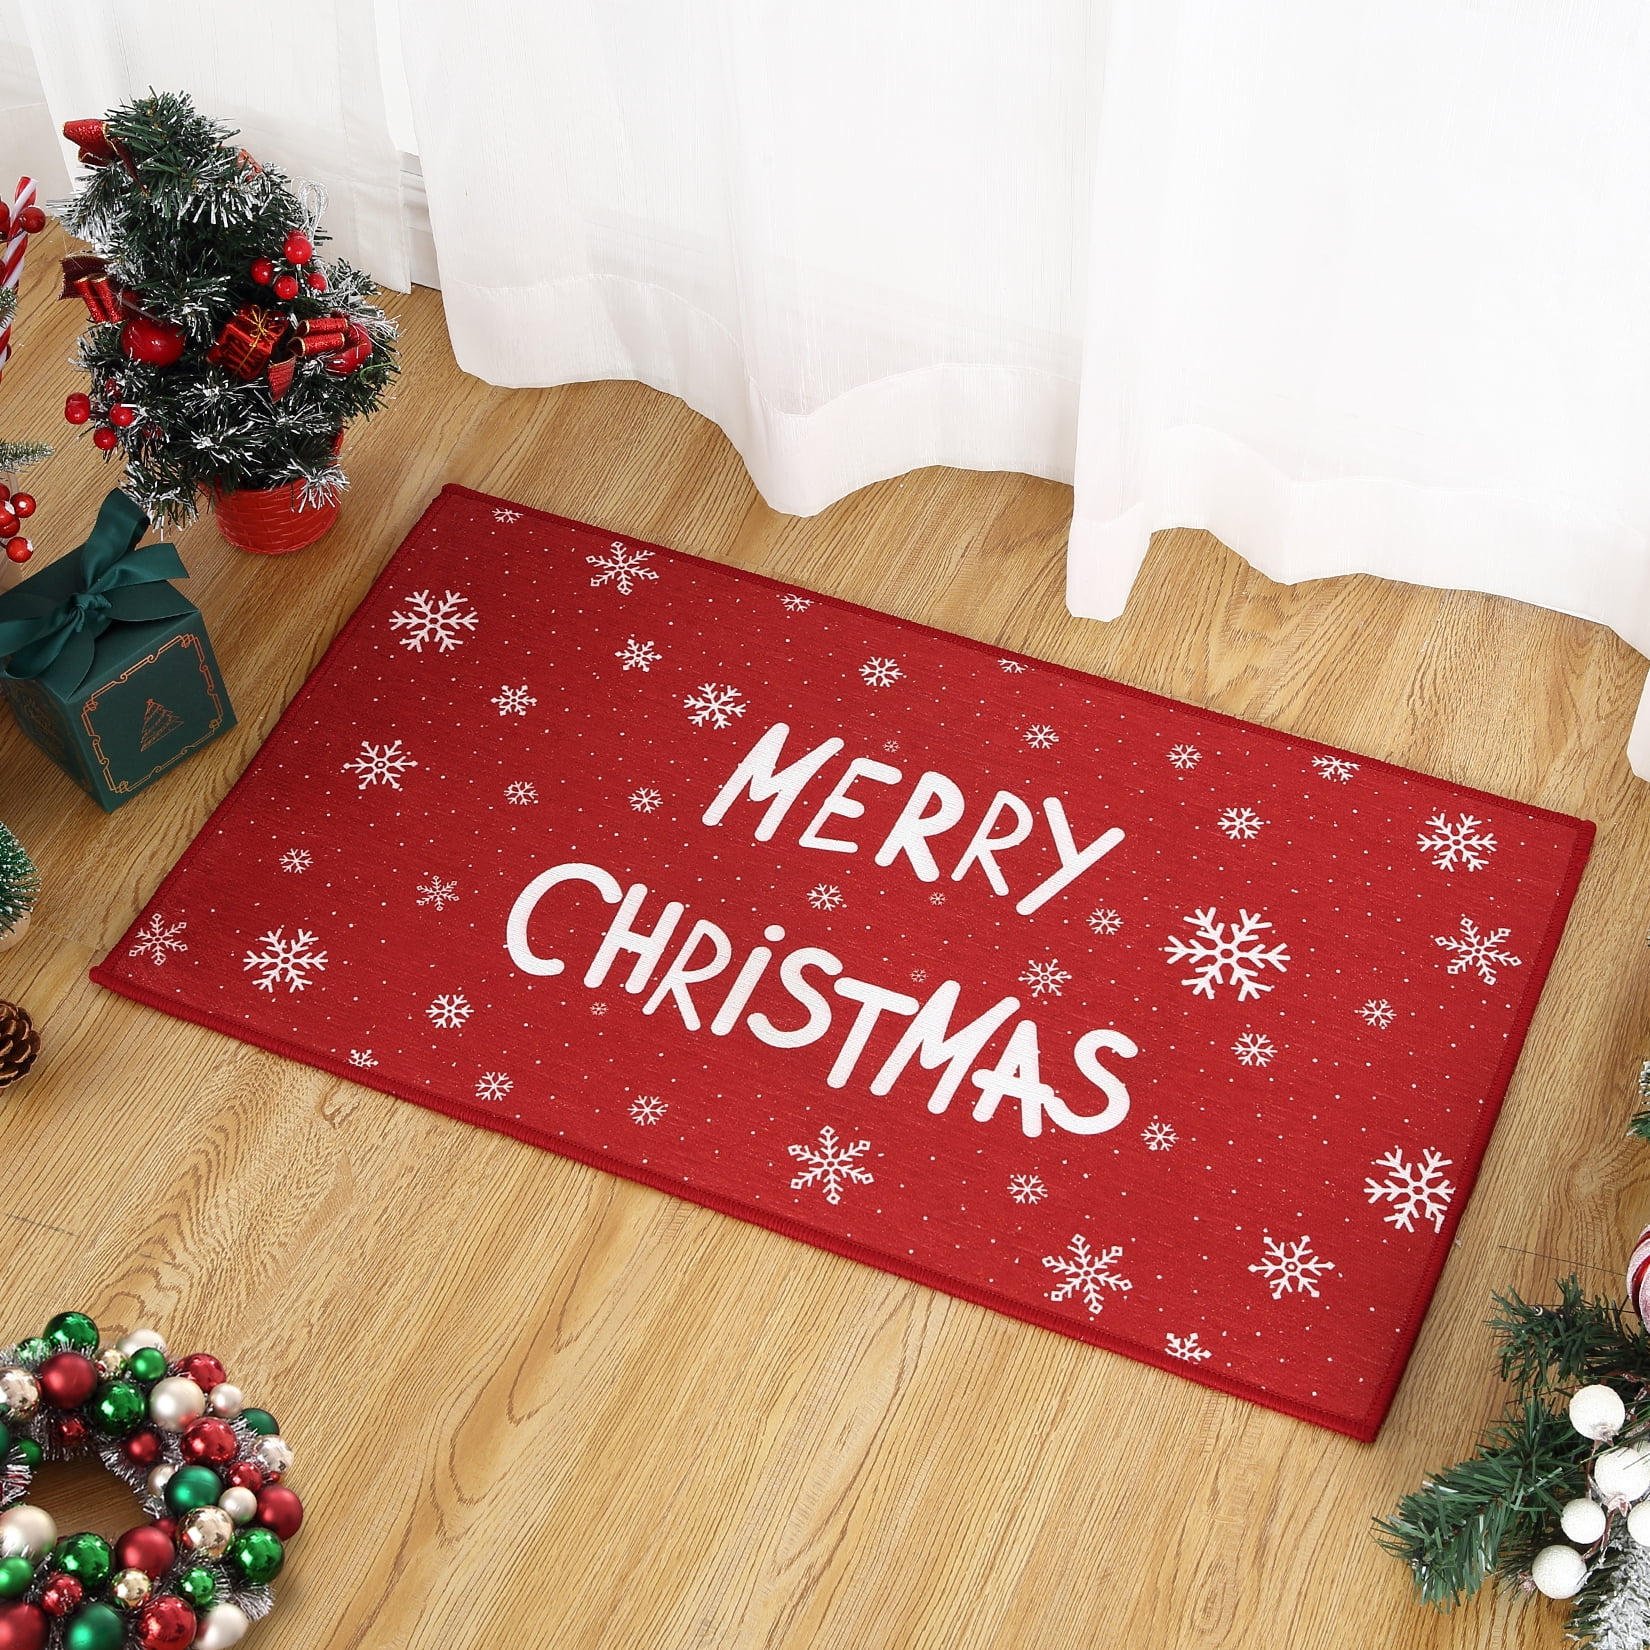 RUGGABLE Christmas Washable Doormat - Perfect Indoor Outdoor Machine  Washable Door Mat for Front Door Porch or Entryway to Welcome Guests -  Christmas